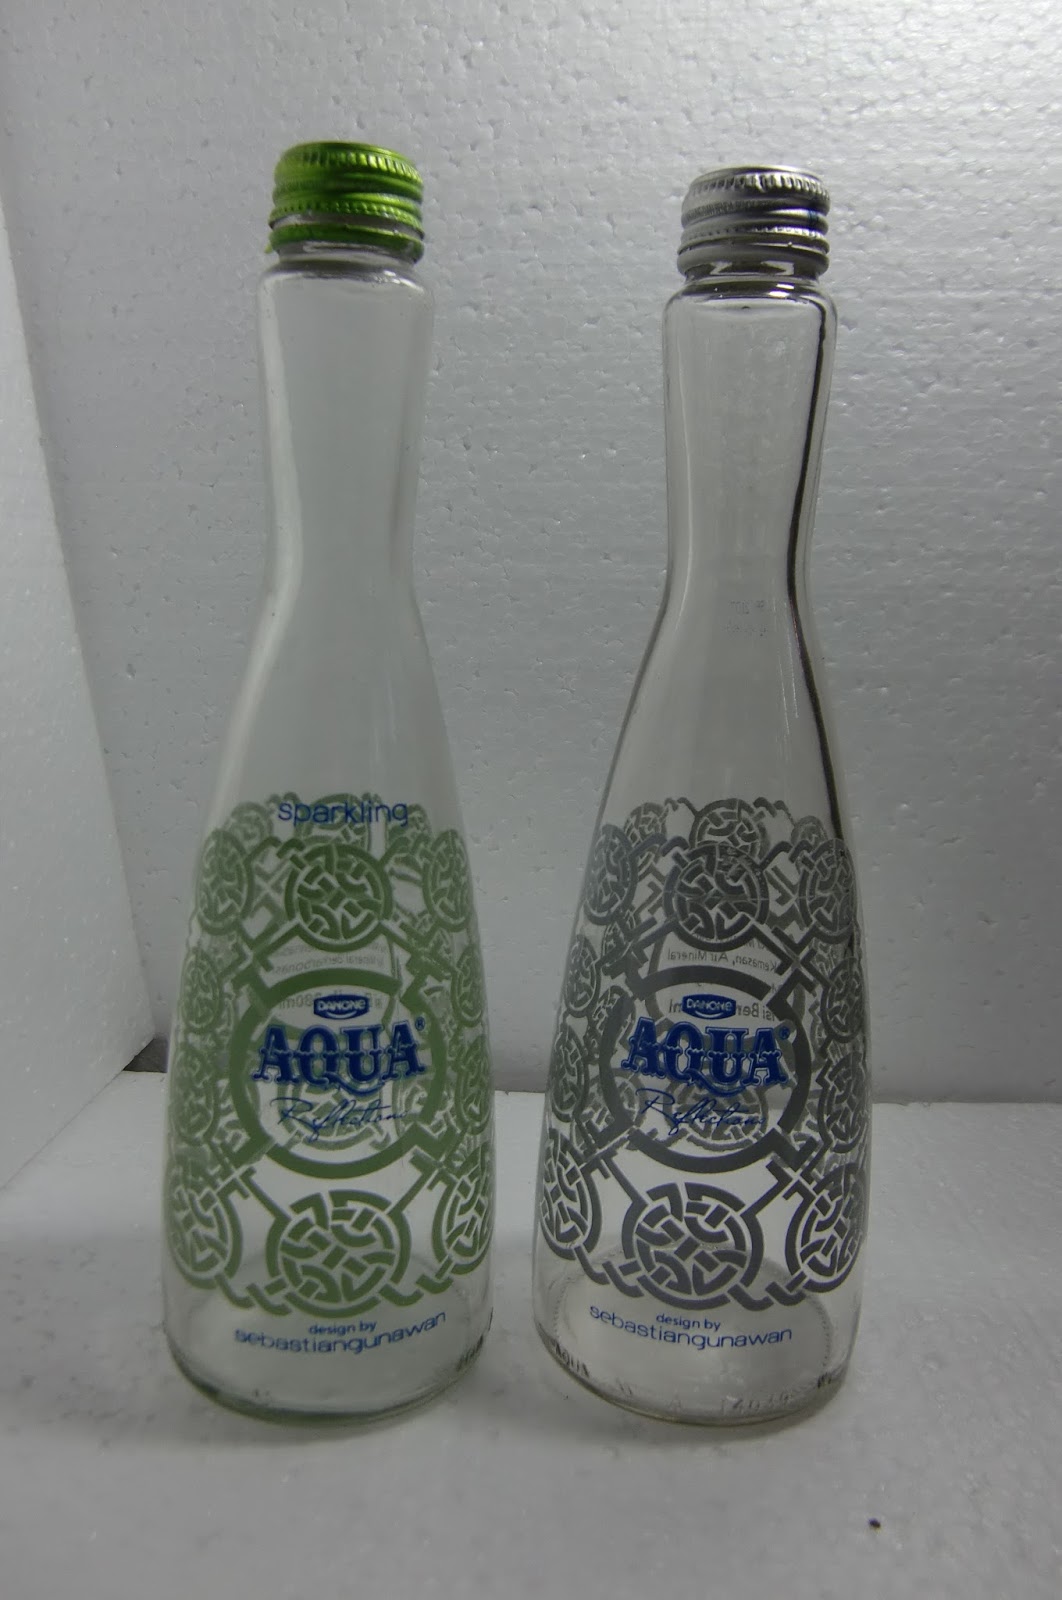 CILEGON ANTIK Sepasang Botol Aqua Desing by Sebastian Gunawan